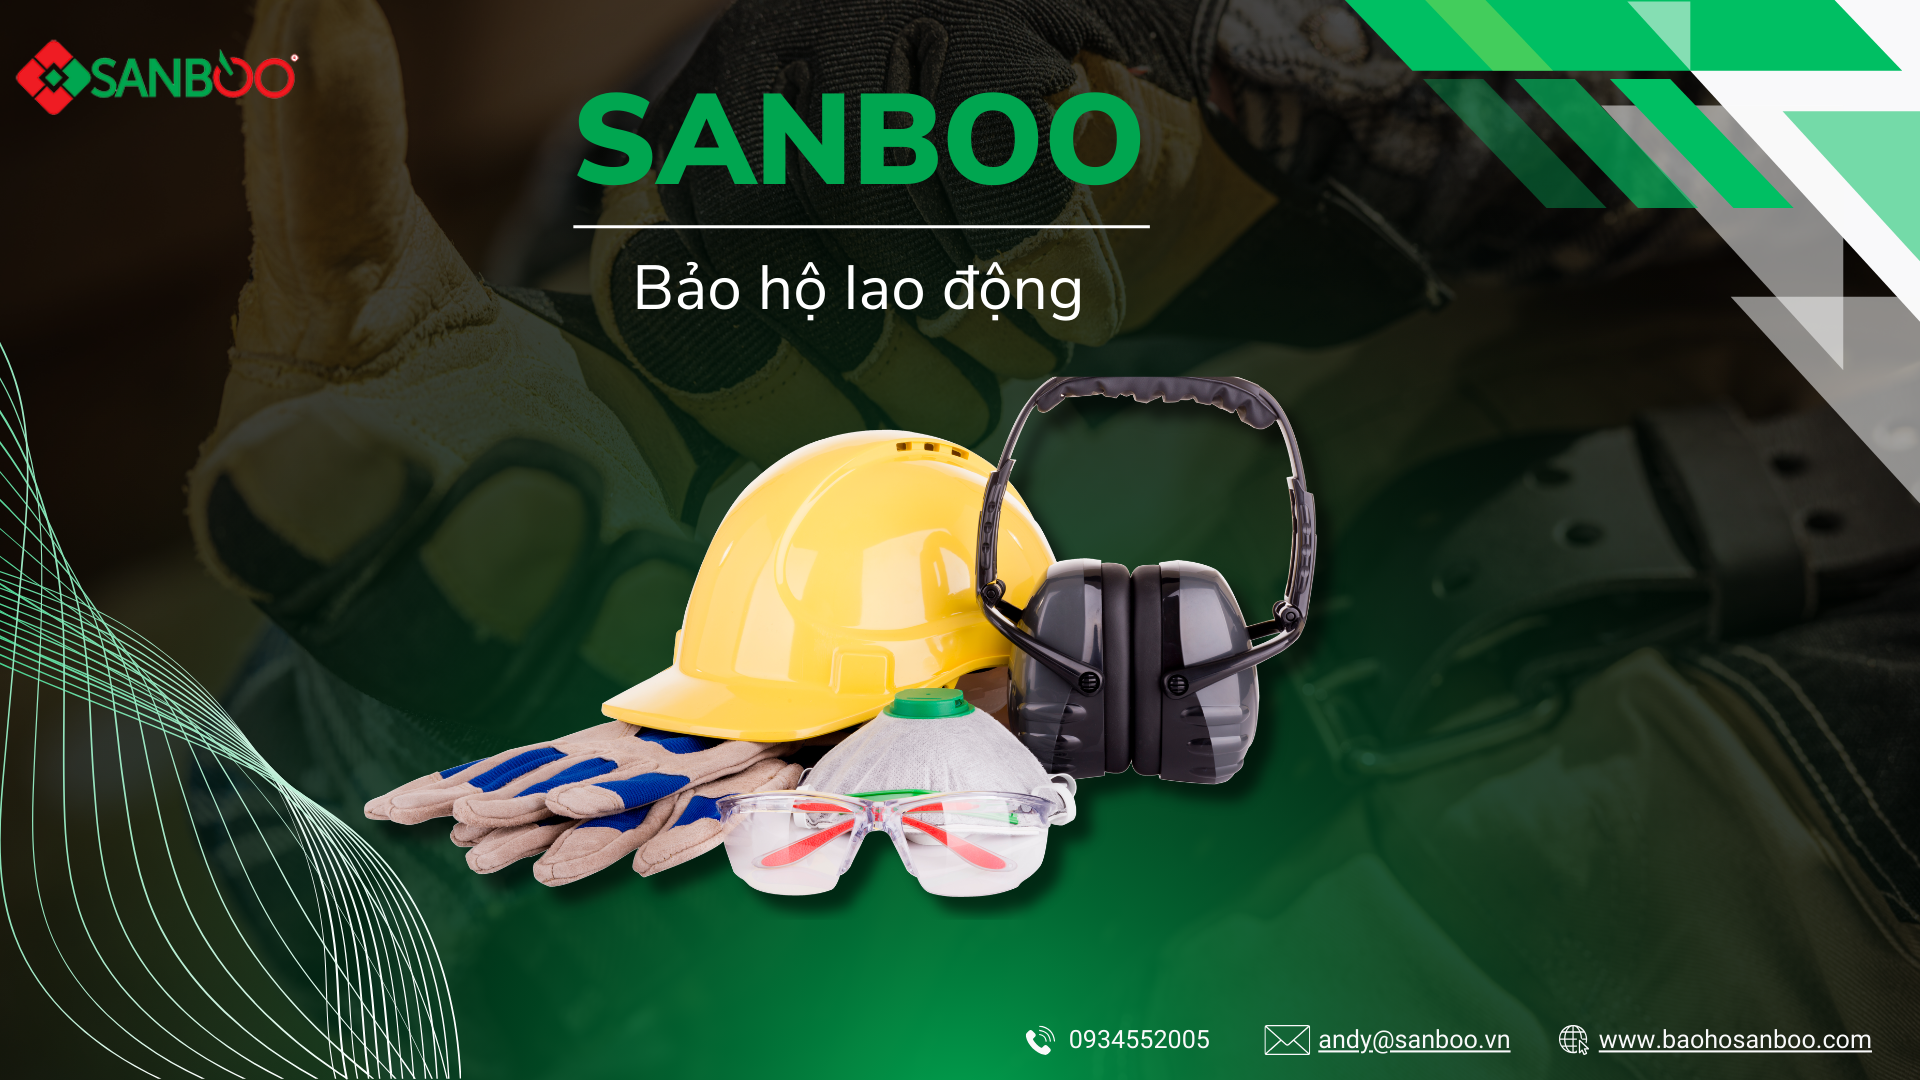 Sanboo Vietnam Cover Image